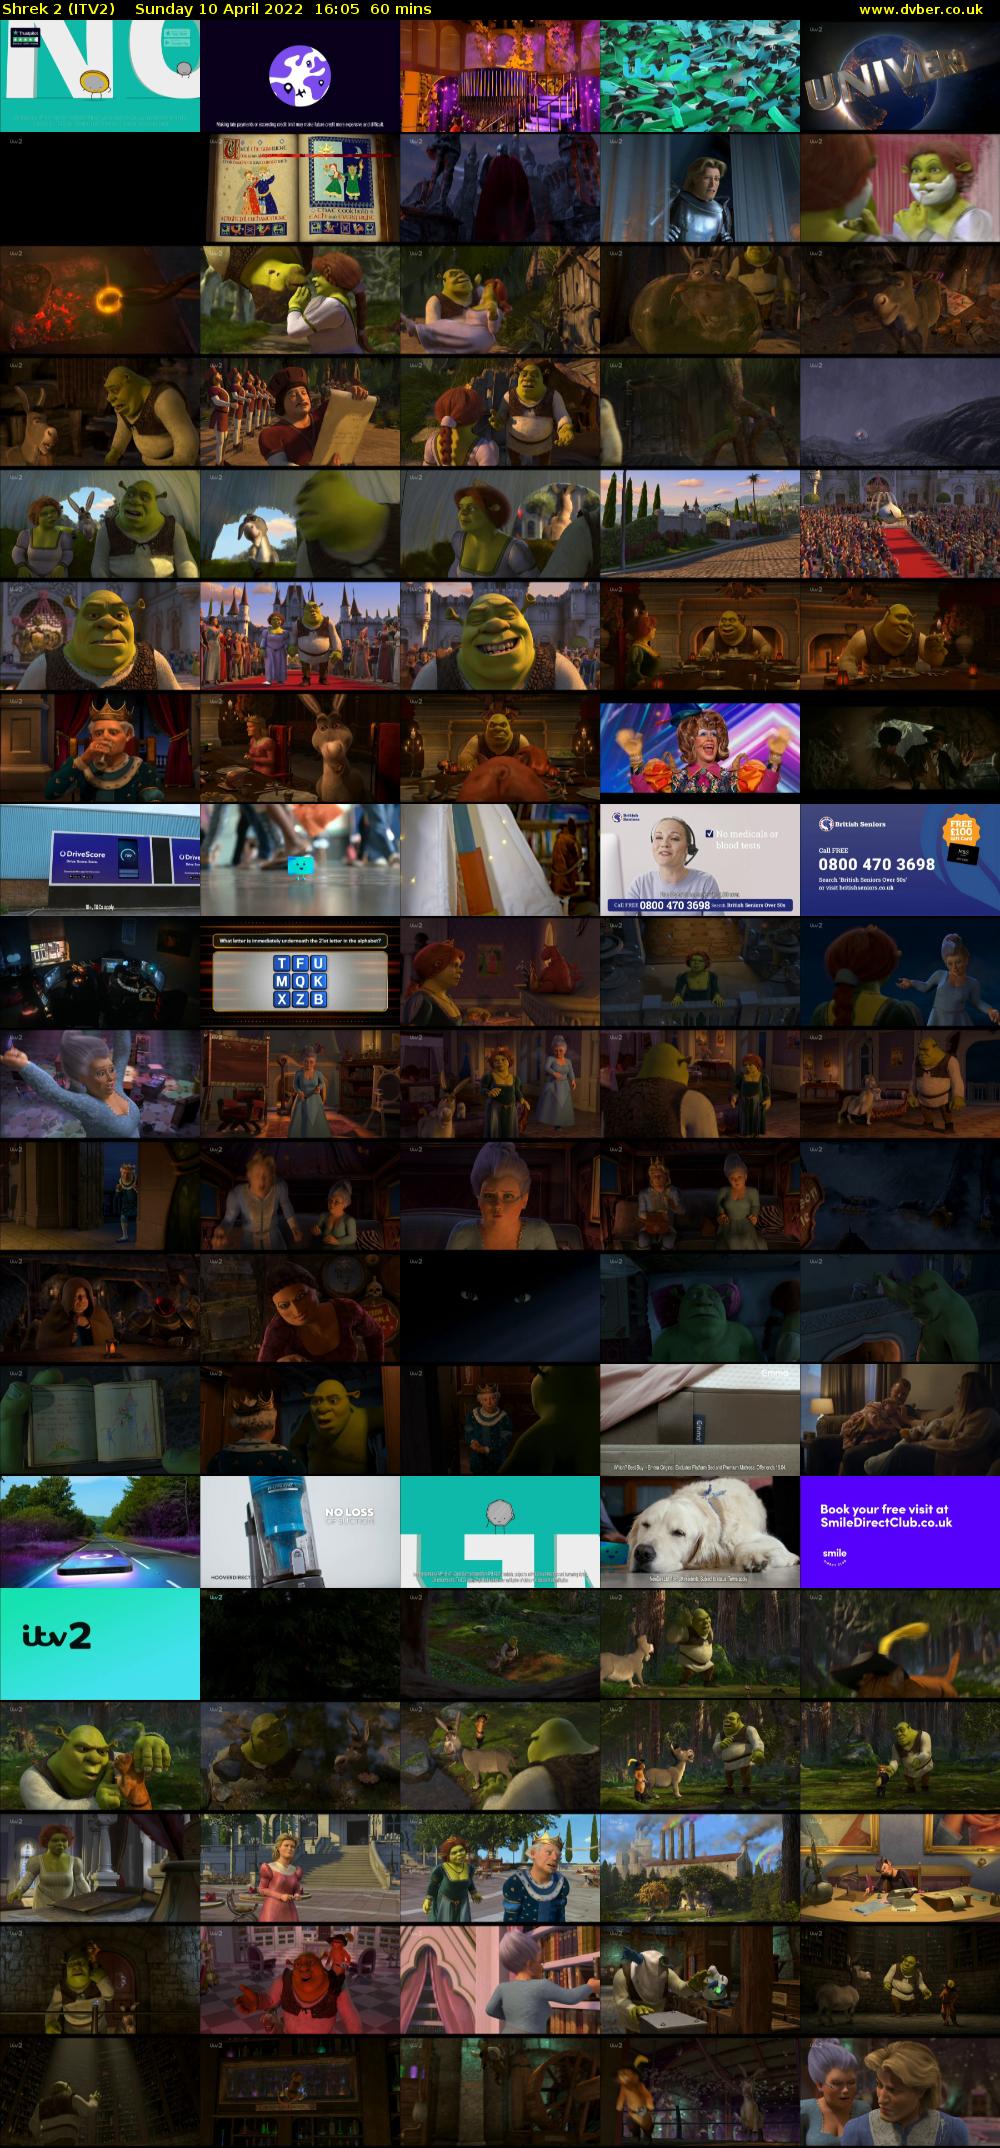 Shrek 2 (ITV2) Sunday 10 April 2022 16:05 - 17:05